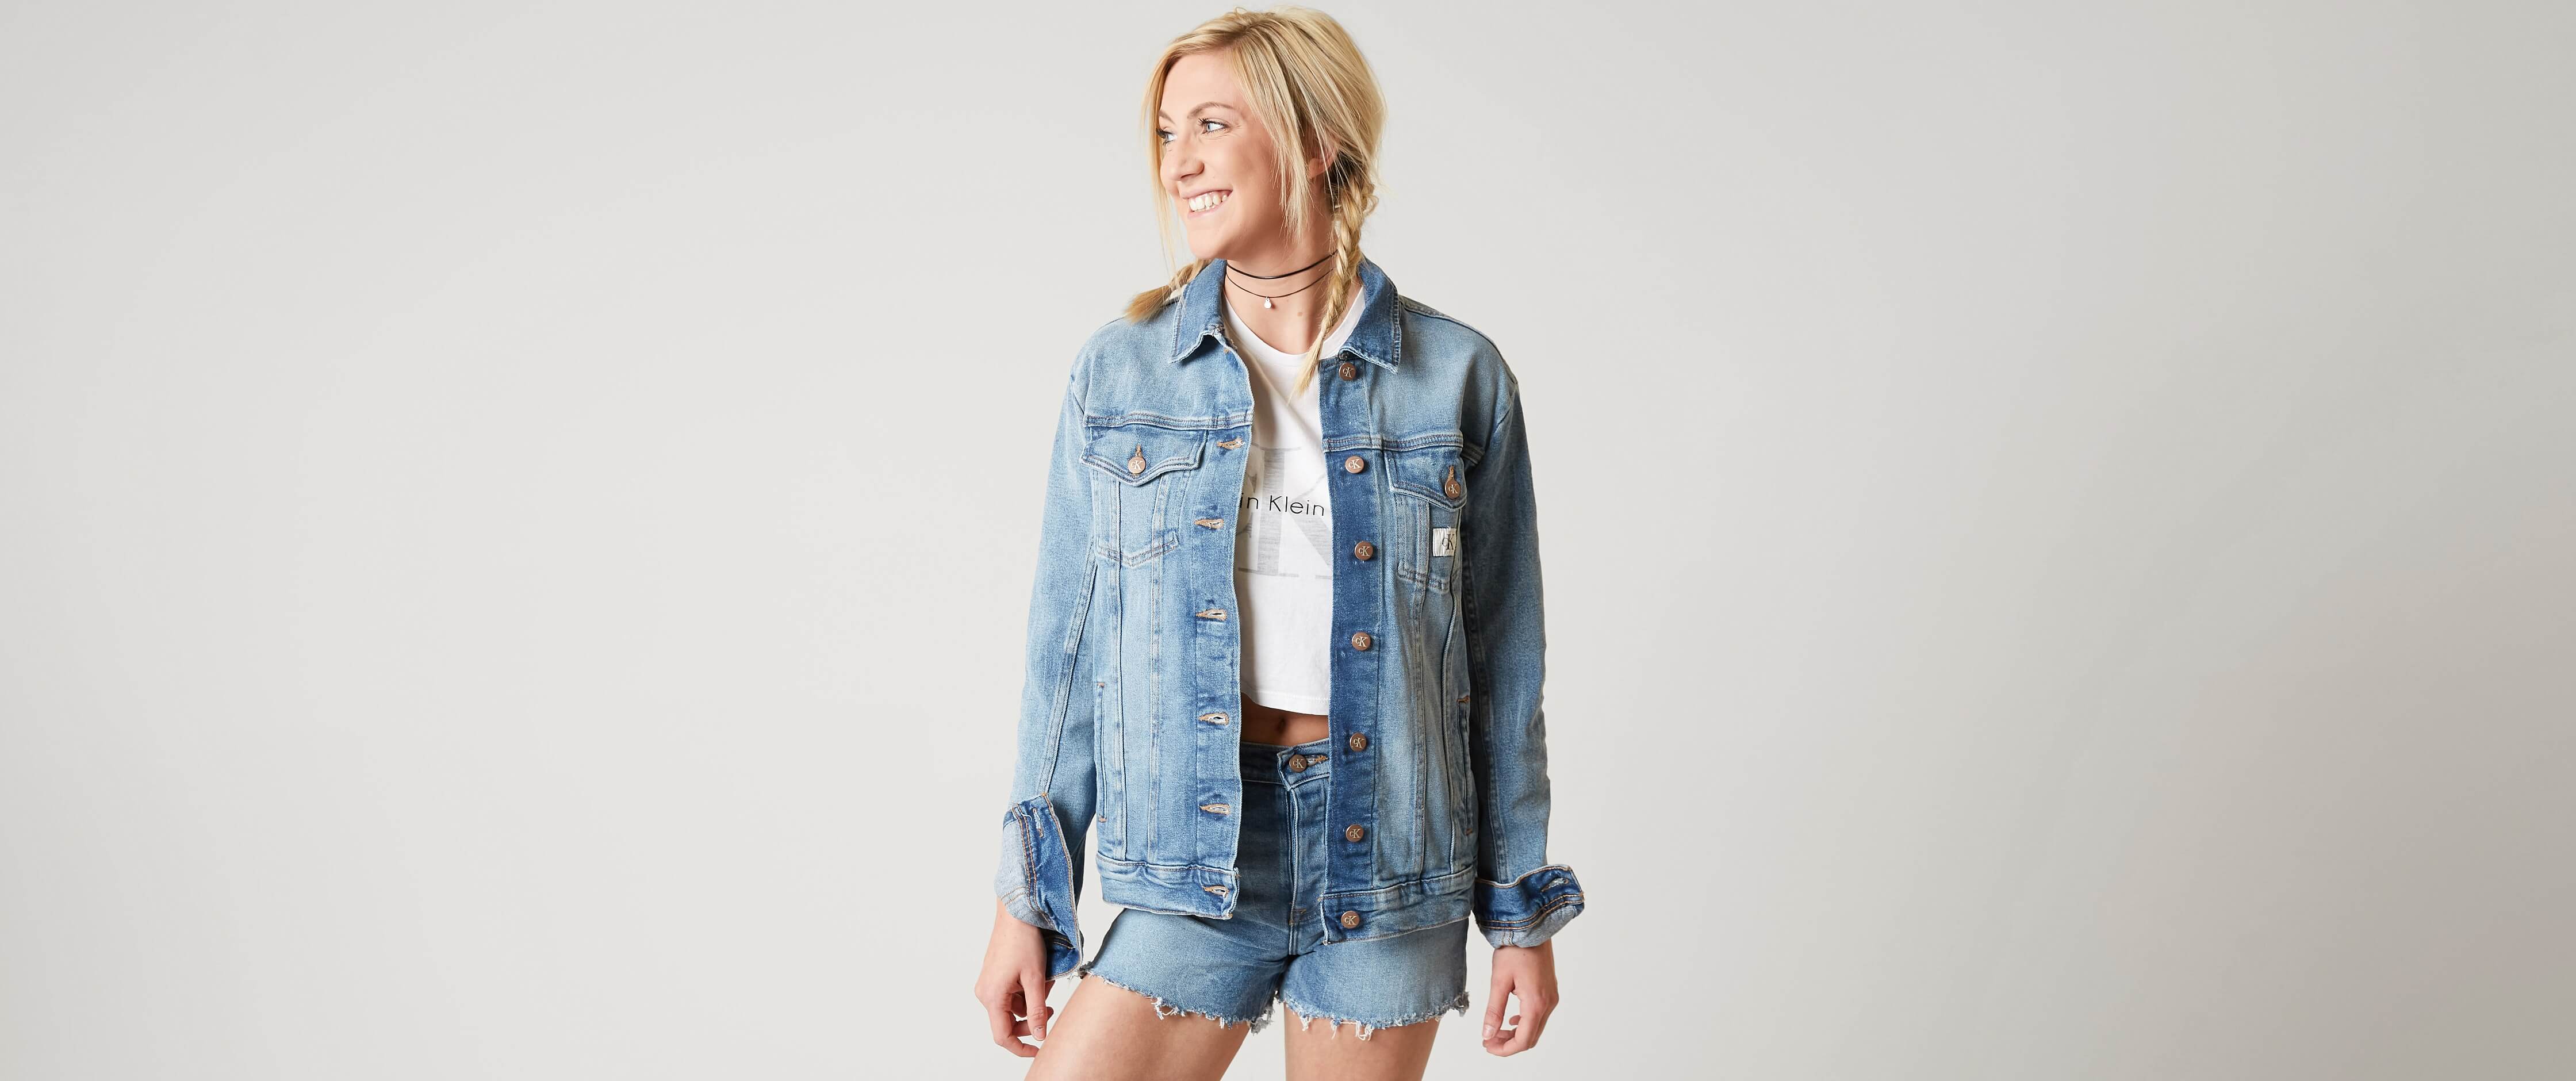 calvin klein jeans women's trucker jacket